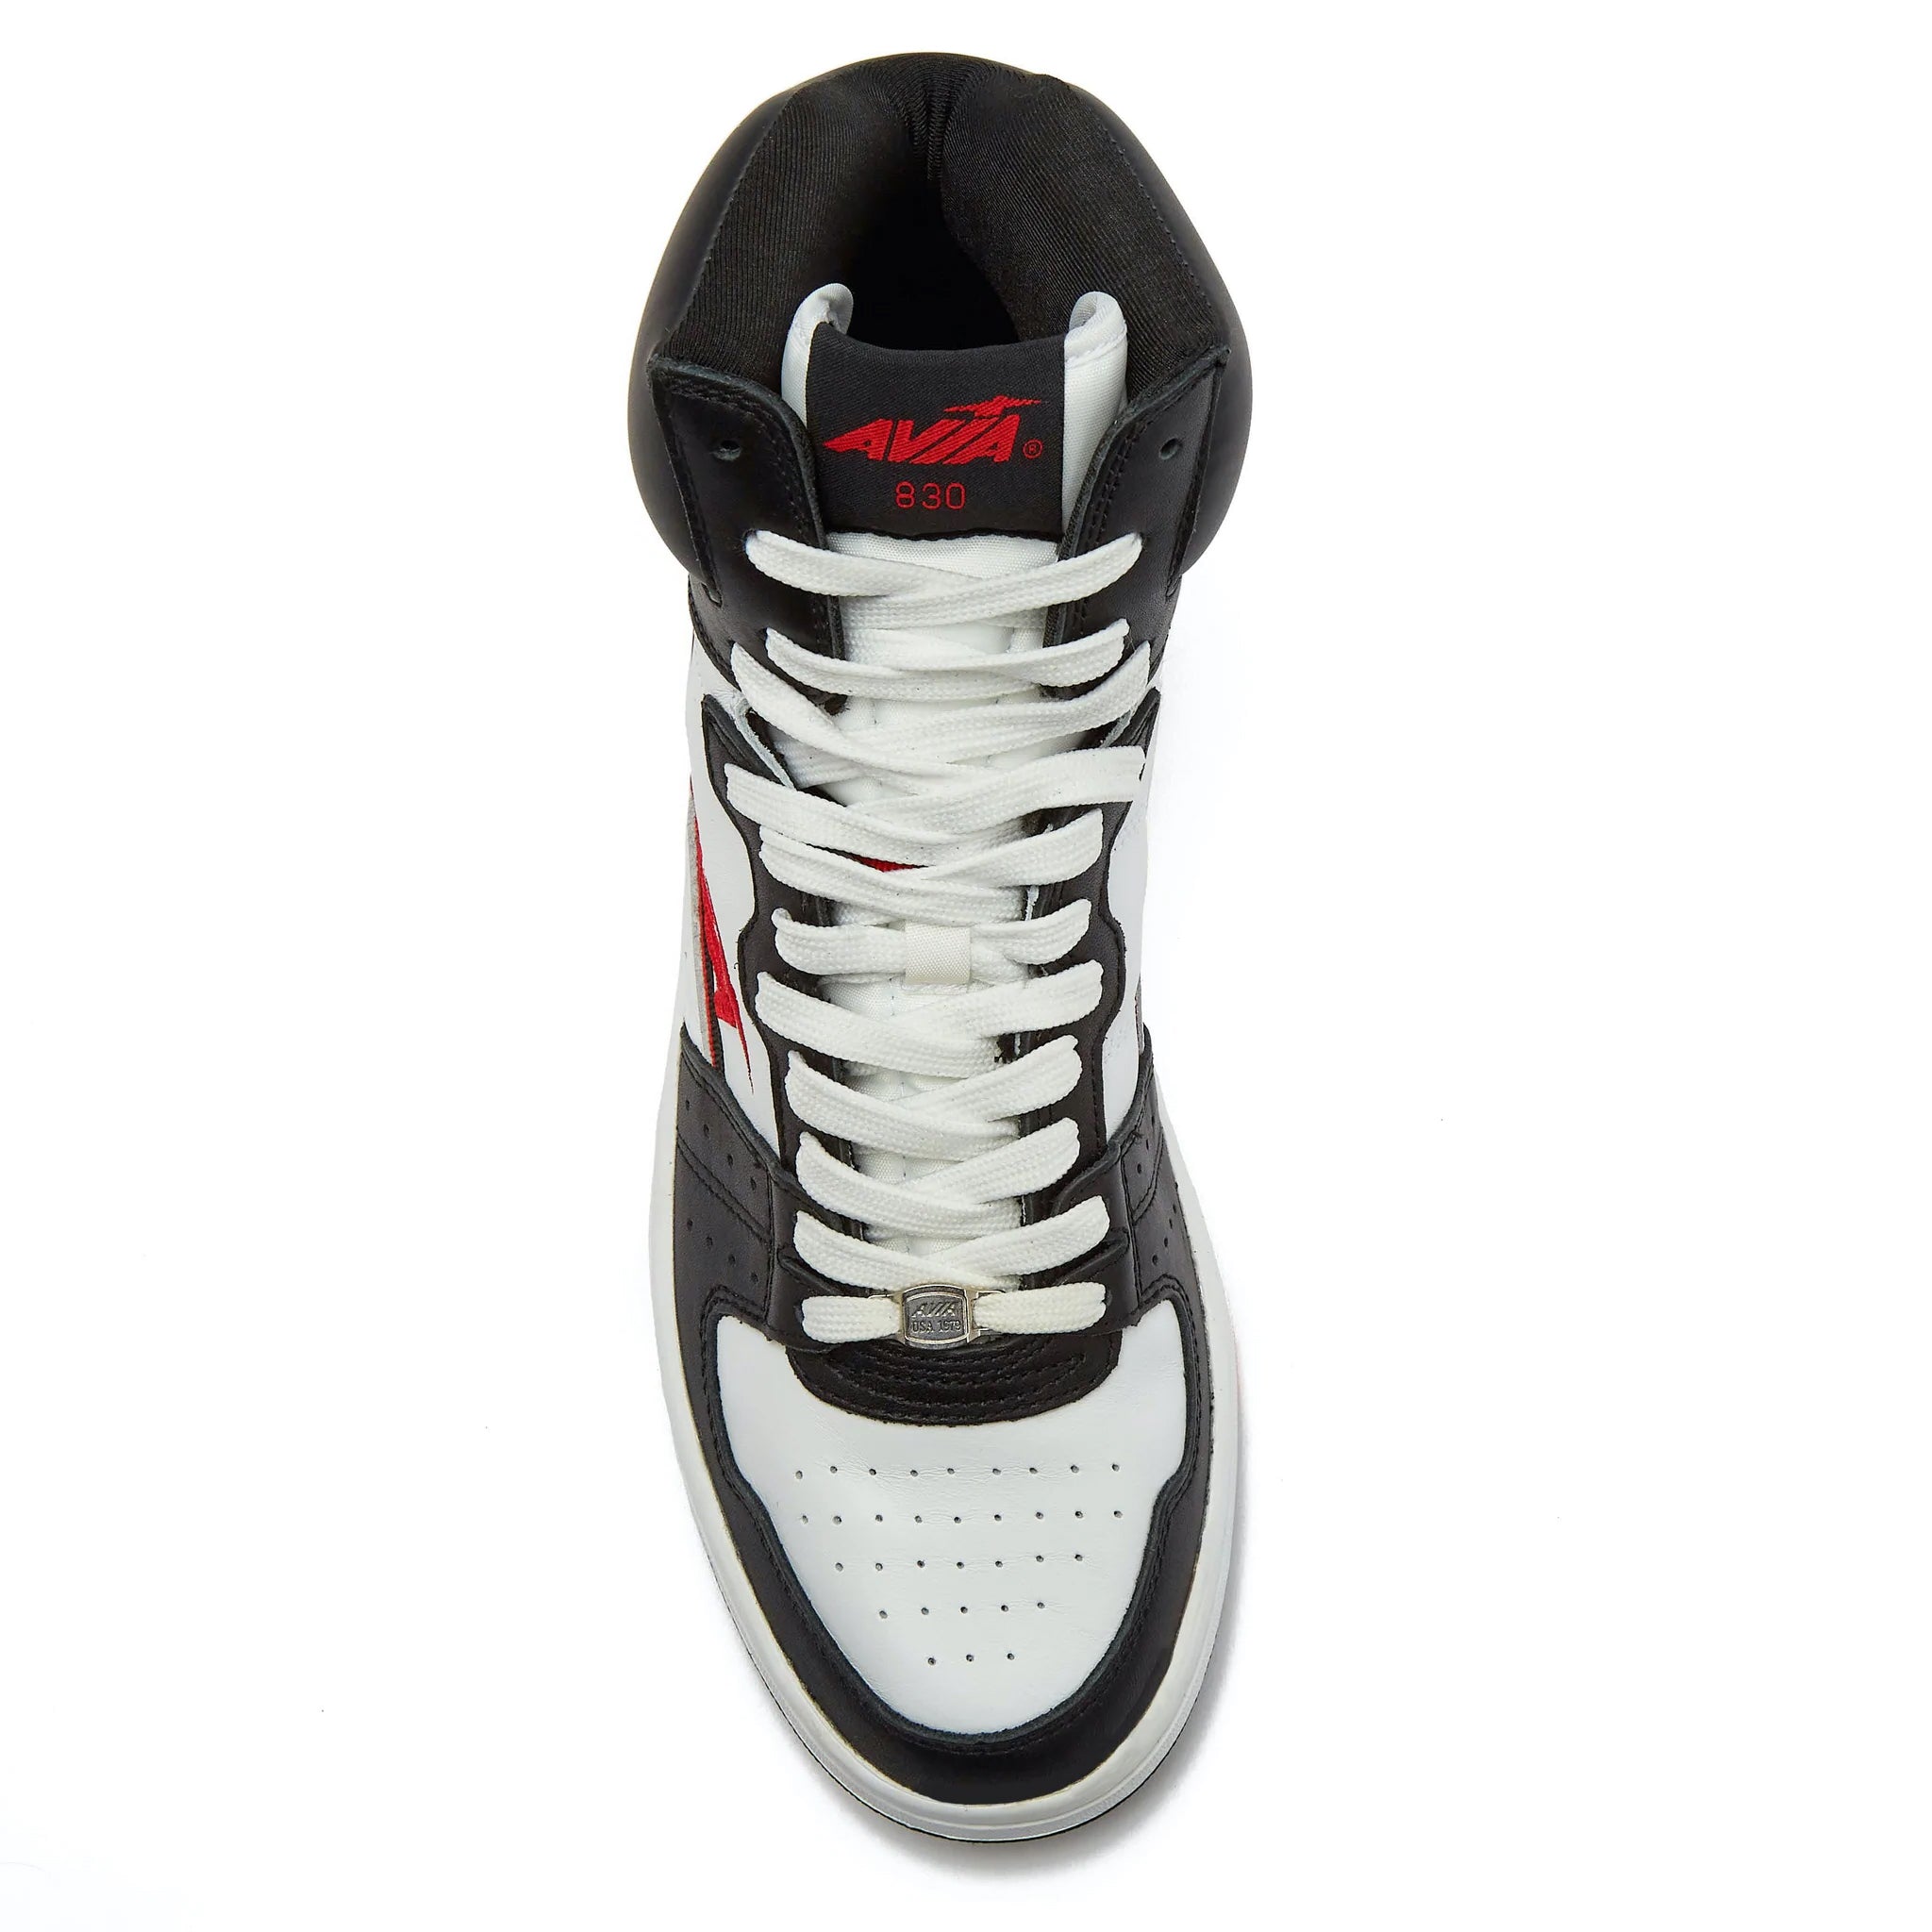 Avia Men's Avi Retro 830 Black Red White Classic Basketball Shoe